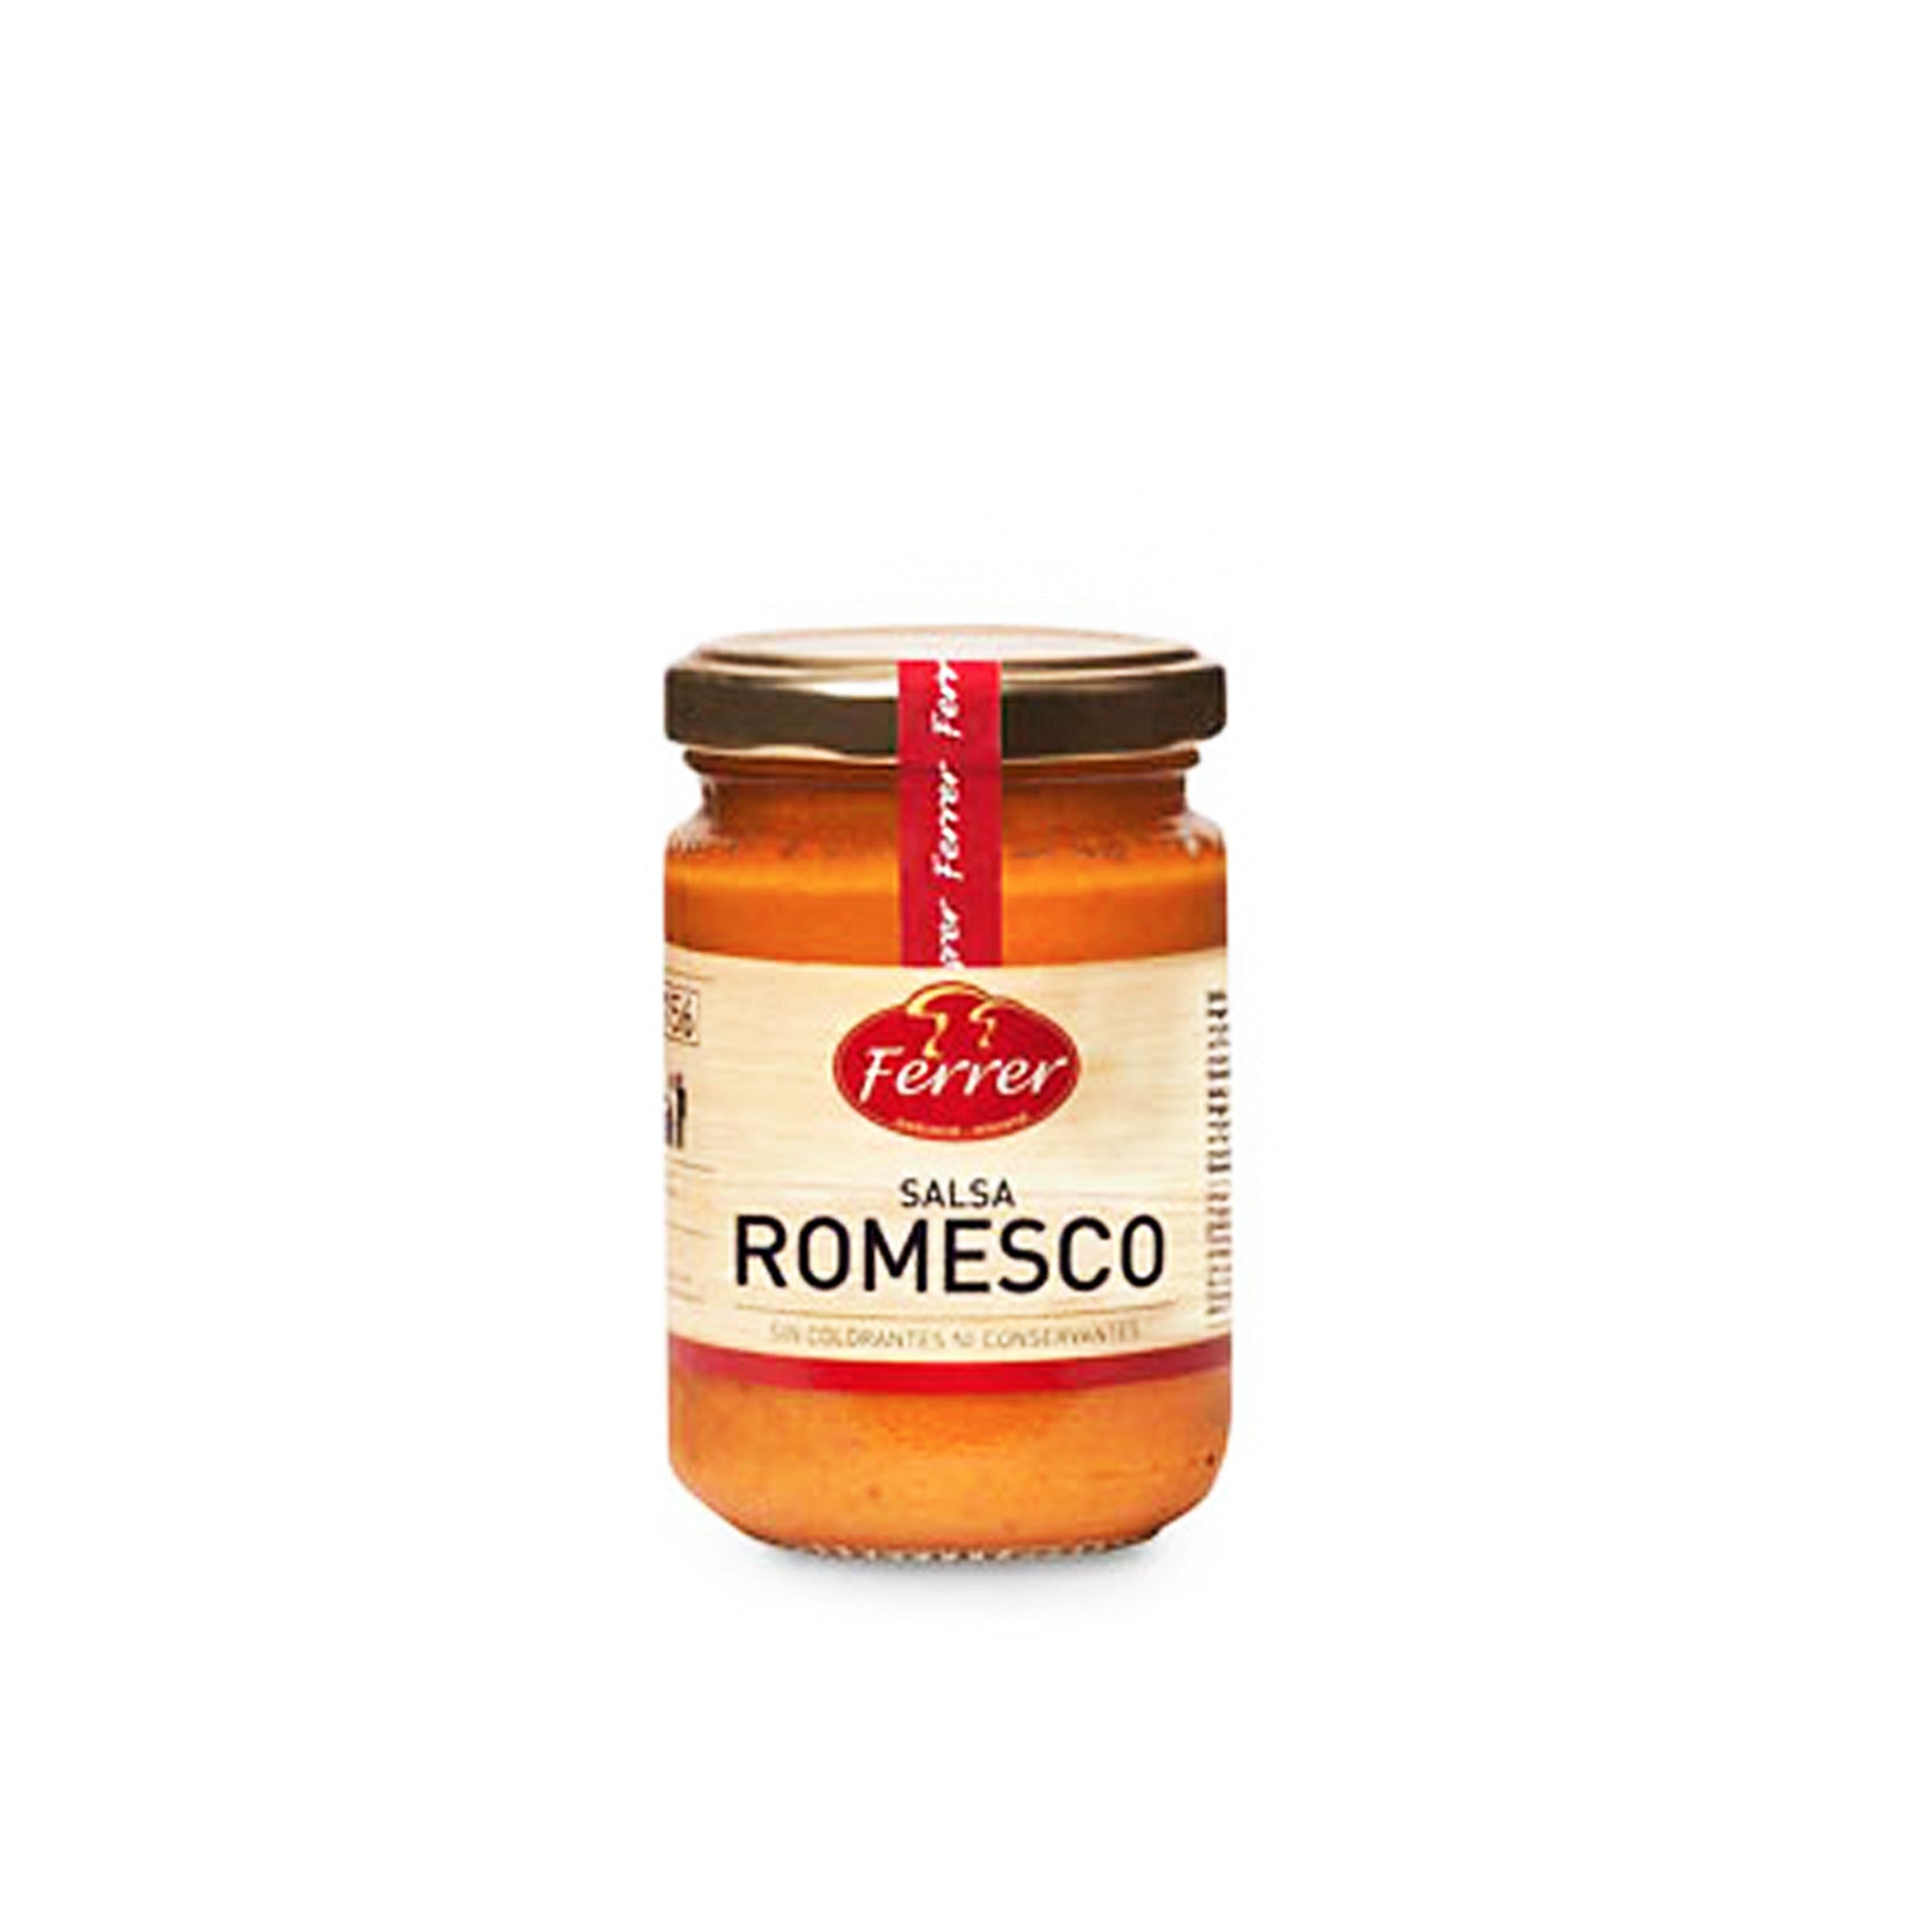 Ferrer Romesco Catalan Sauce